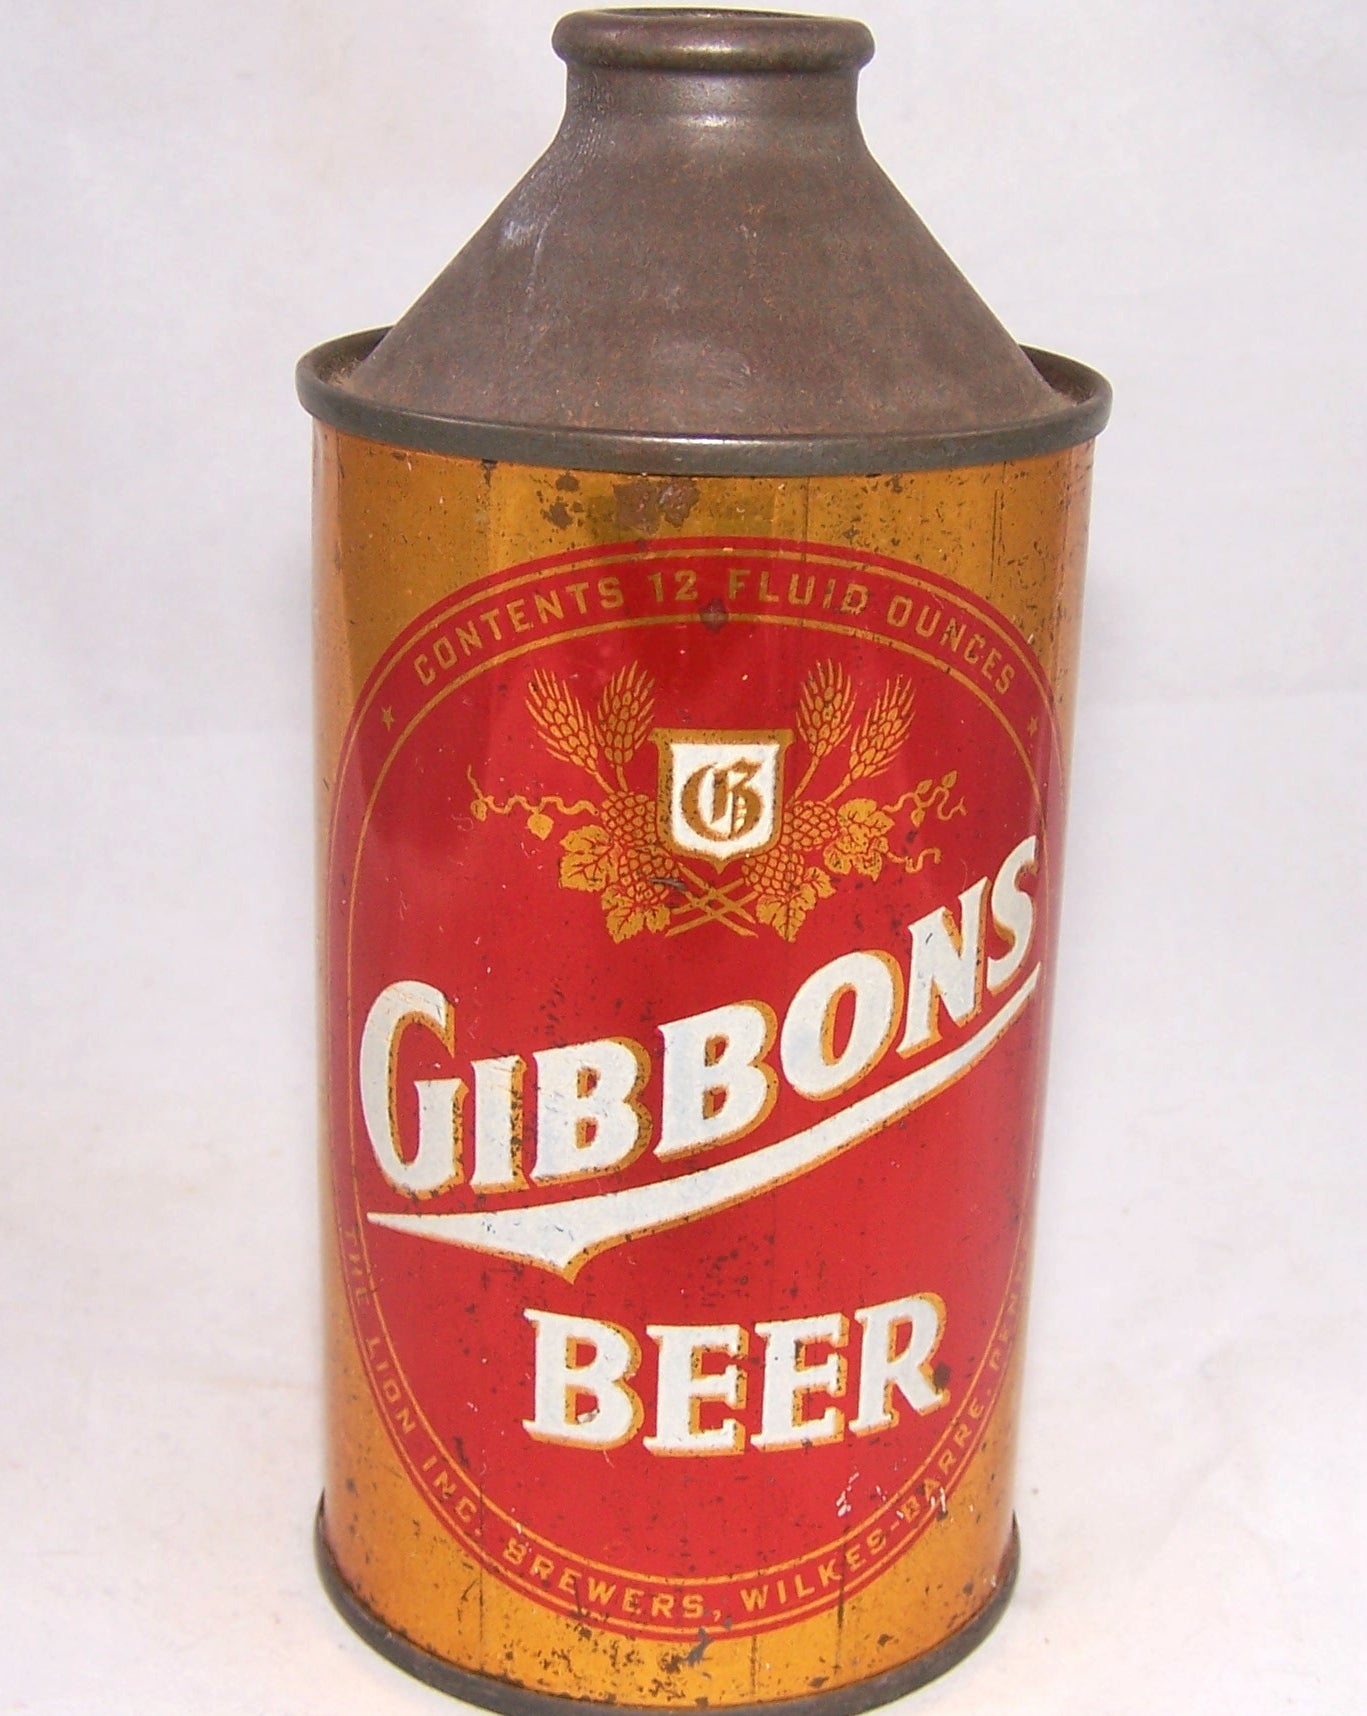 Gibbon's Beer, USBC 154-27, Grade 1- Sold on 03/18/18